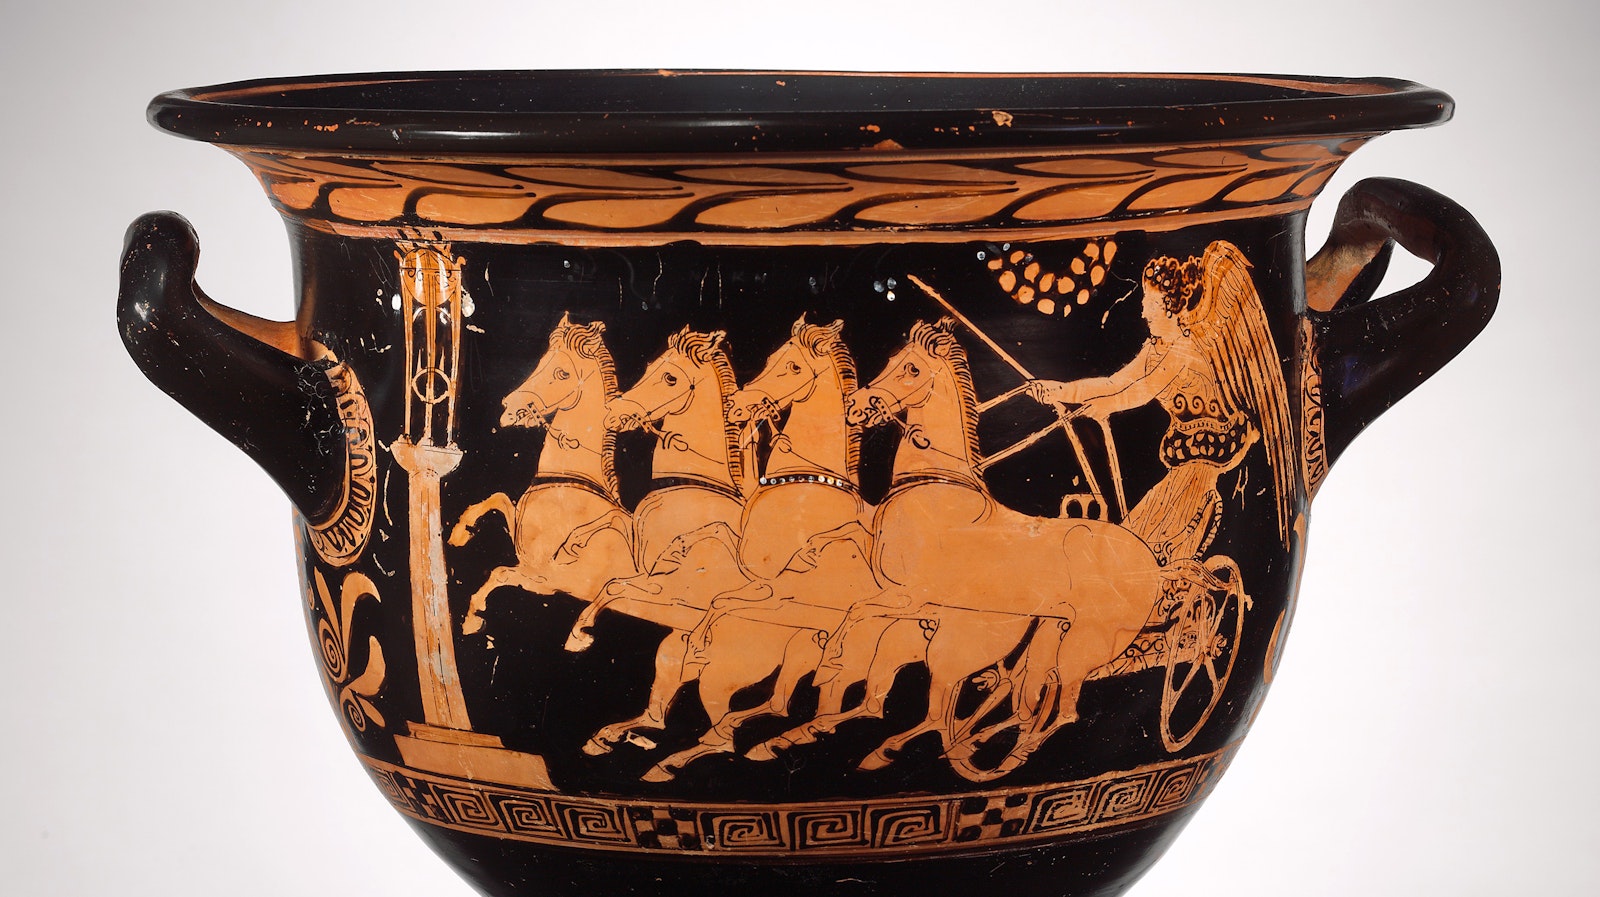 Terracotta Bell Krater Bowl Nike 5th Century BCE The Met